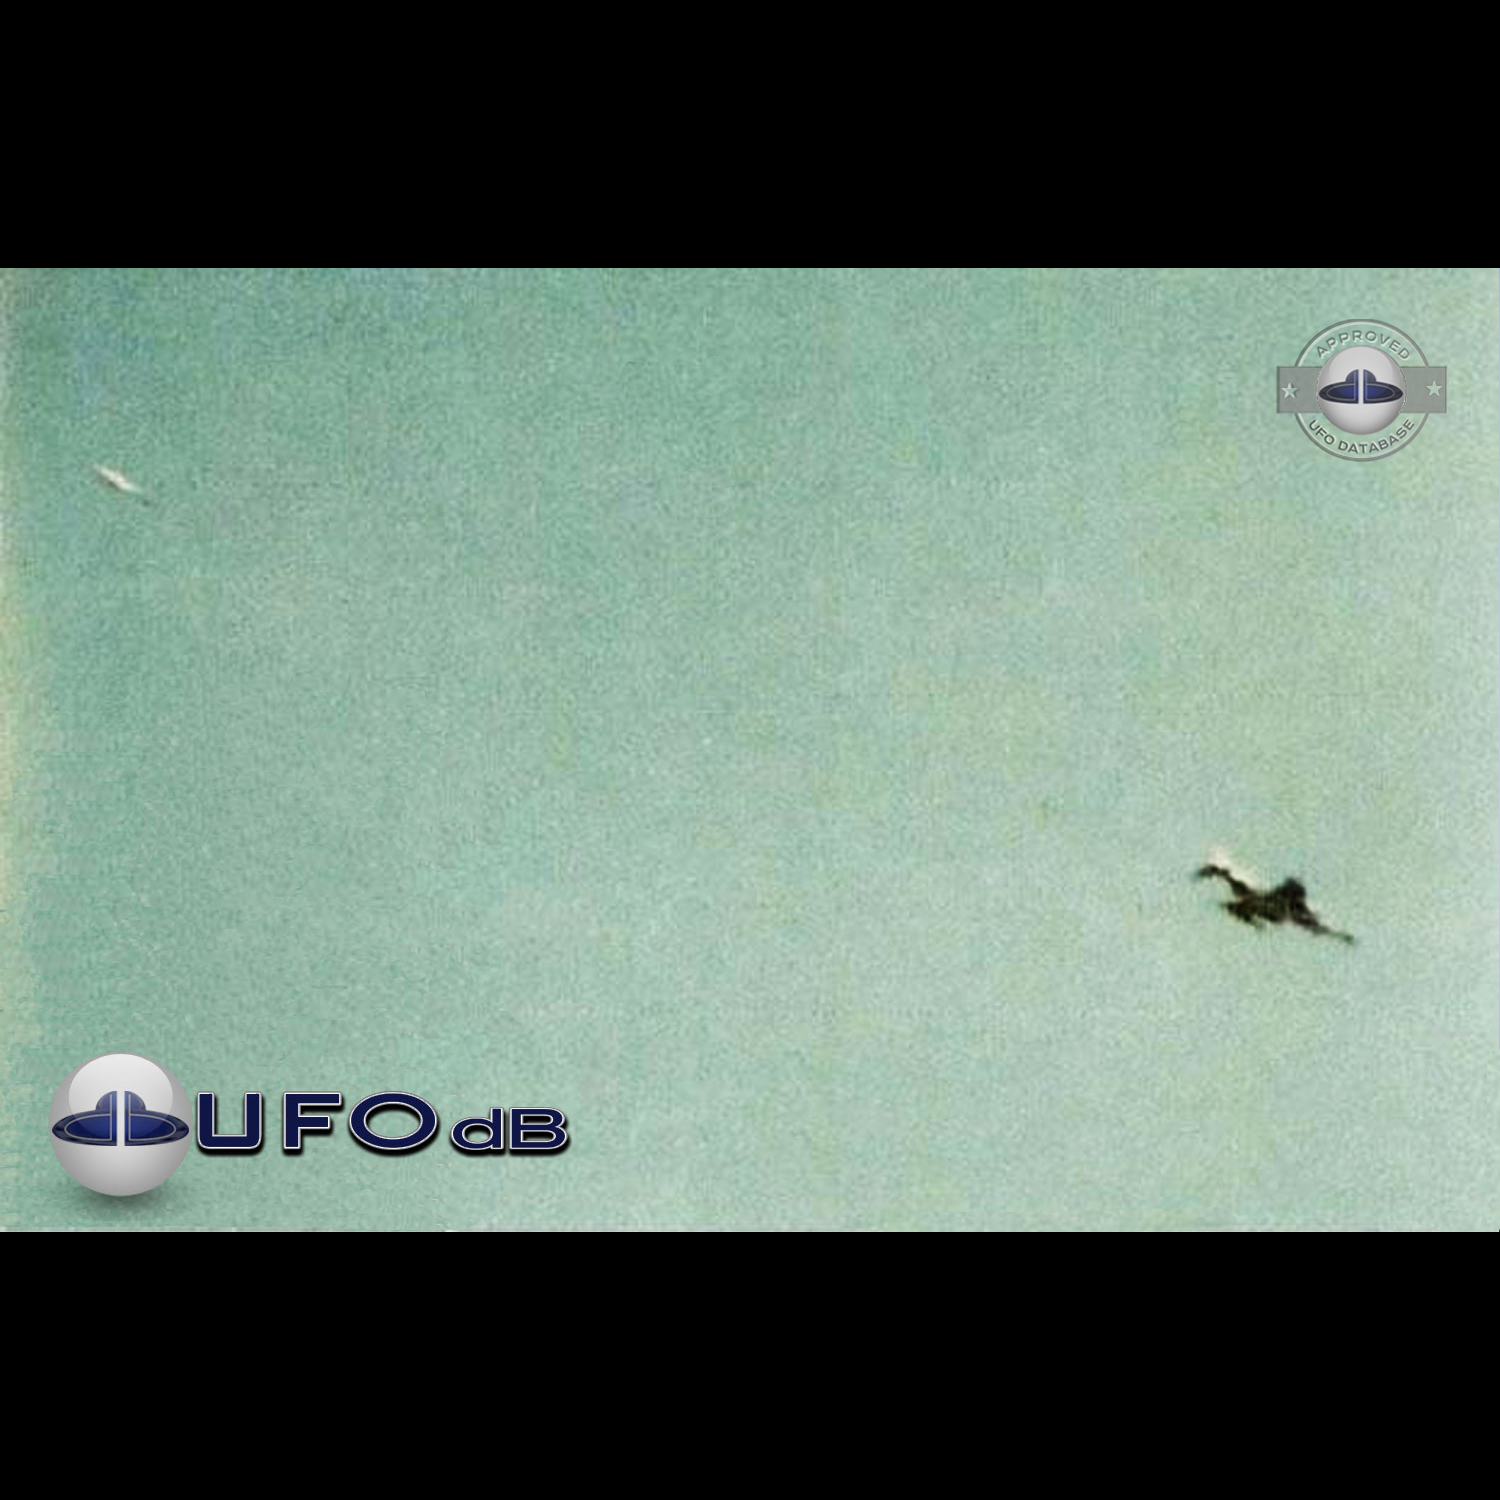 UFO chasing a F-4 Phantom II Jet fighter | Keltern, Germany | 1979 UFO Picture #163-1